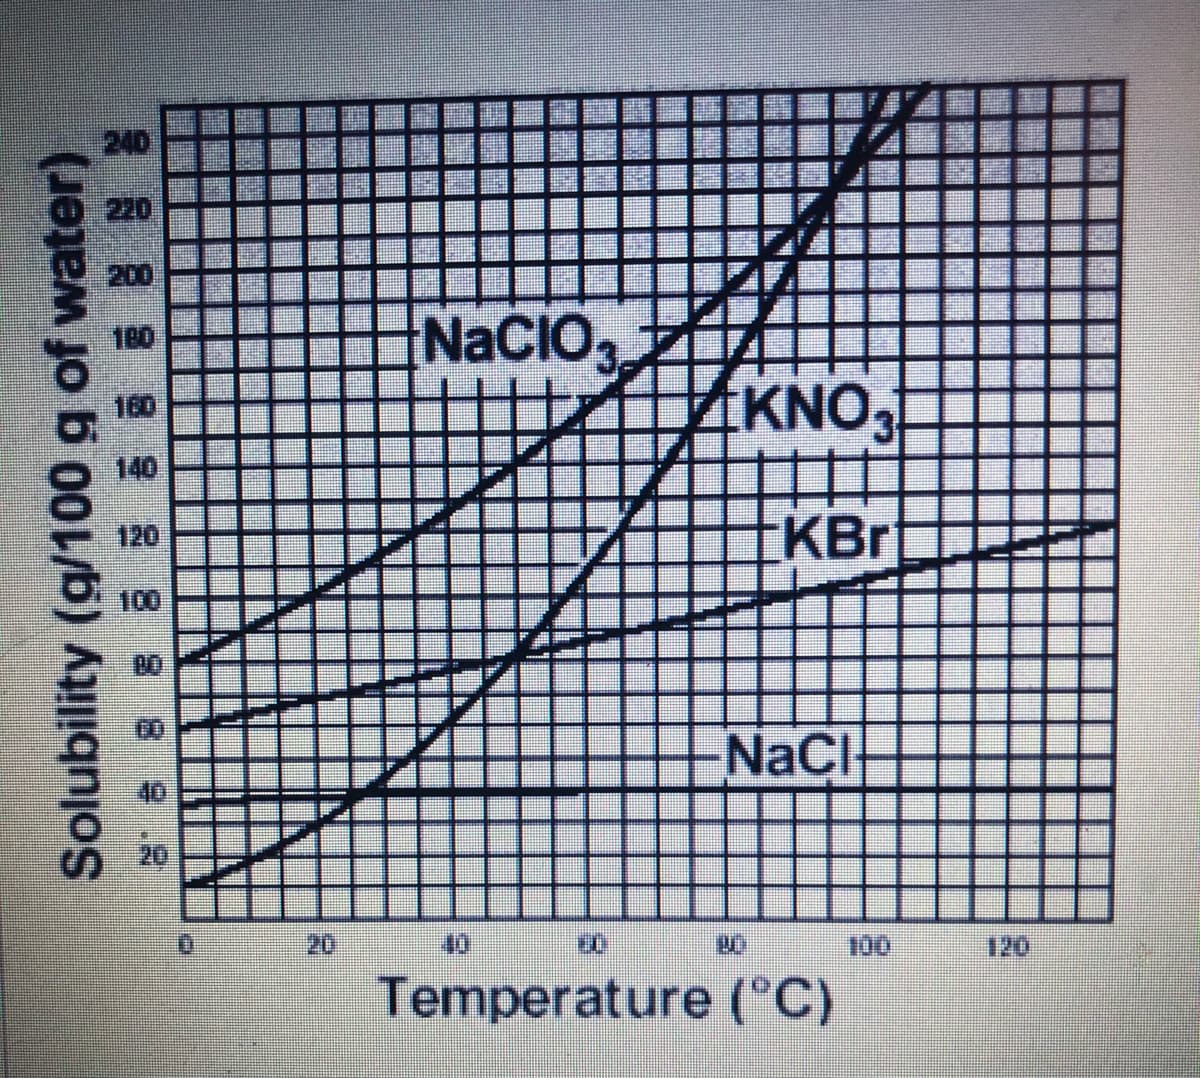 240
220
200
NACIO
180
KNO
160
140
KBr
120
100
Naci
20
100
120
Temperature ("C)
Solubility (g/100 g of water)
